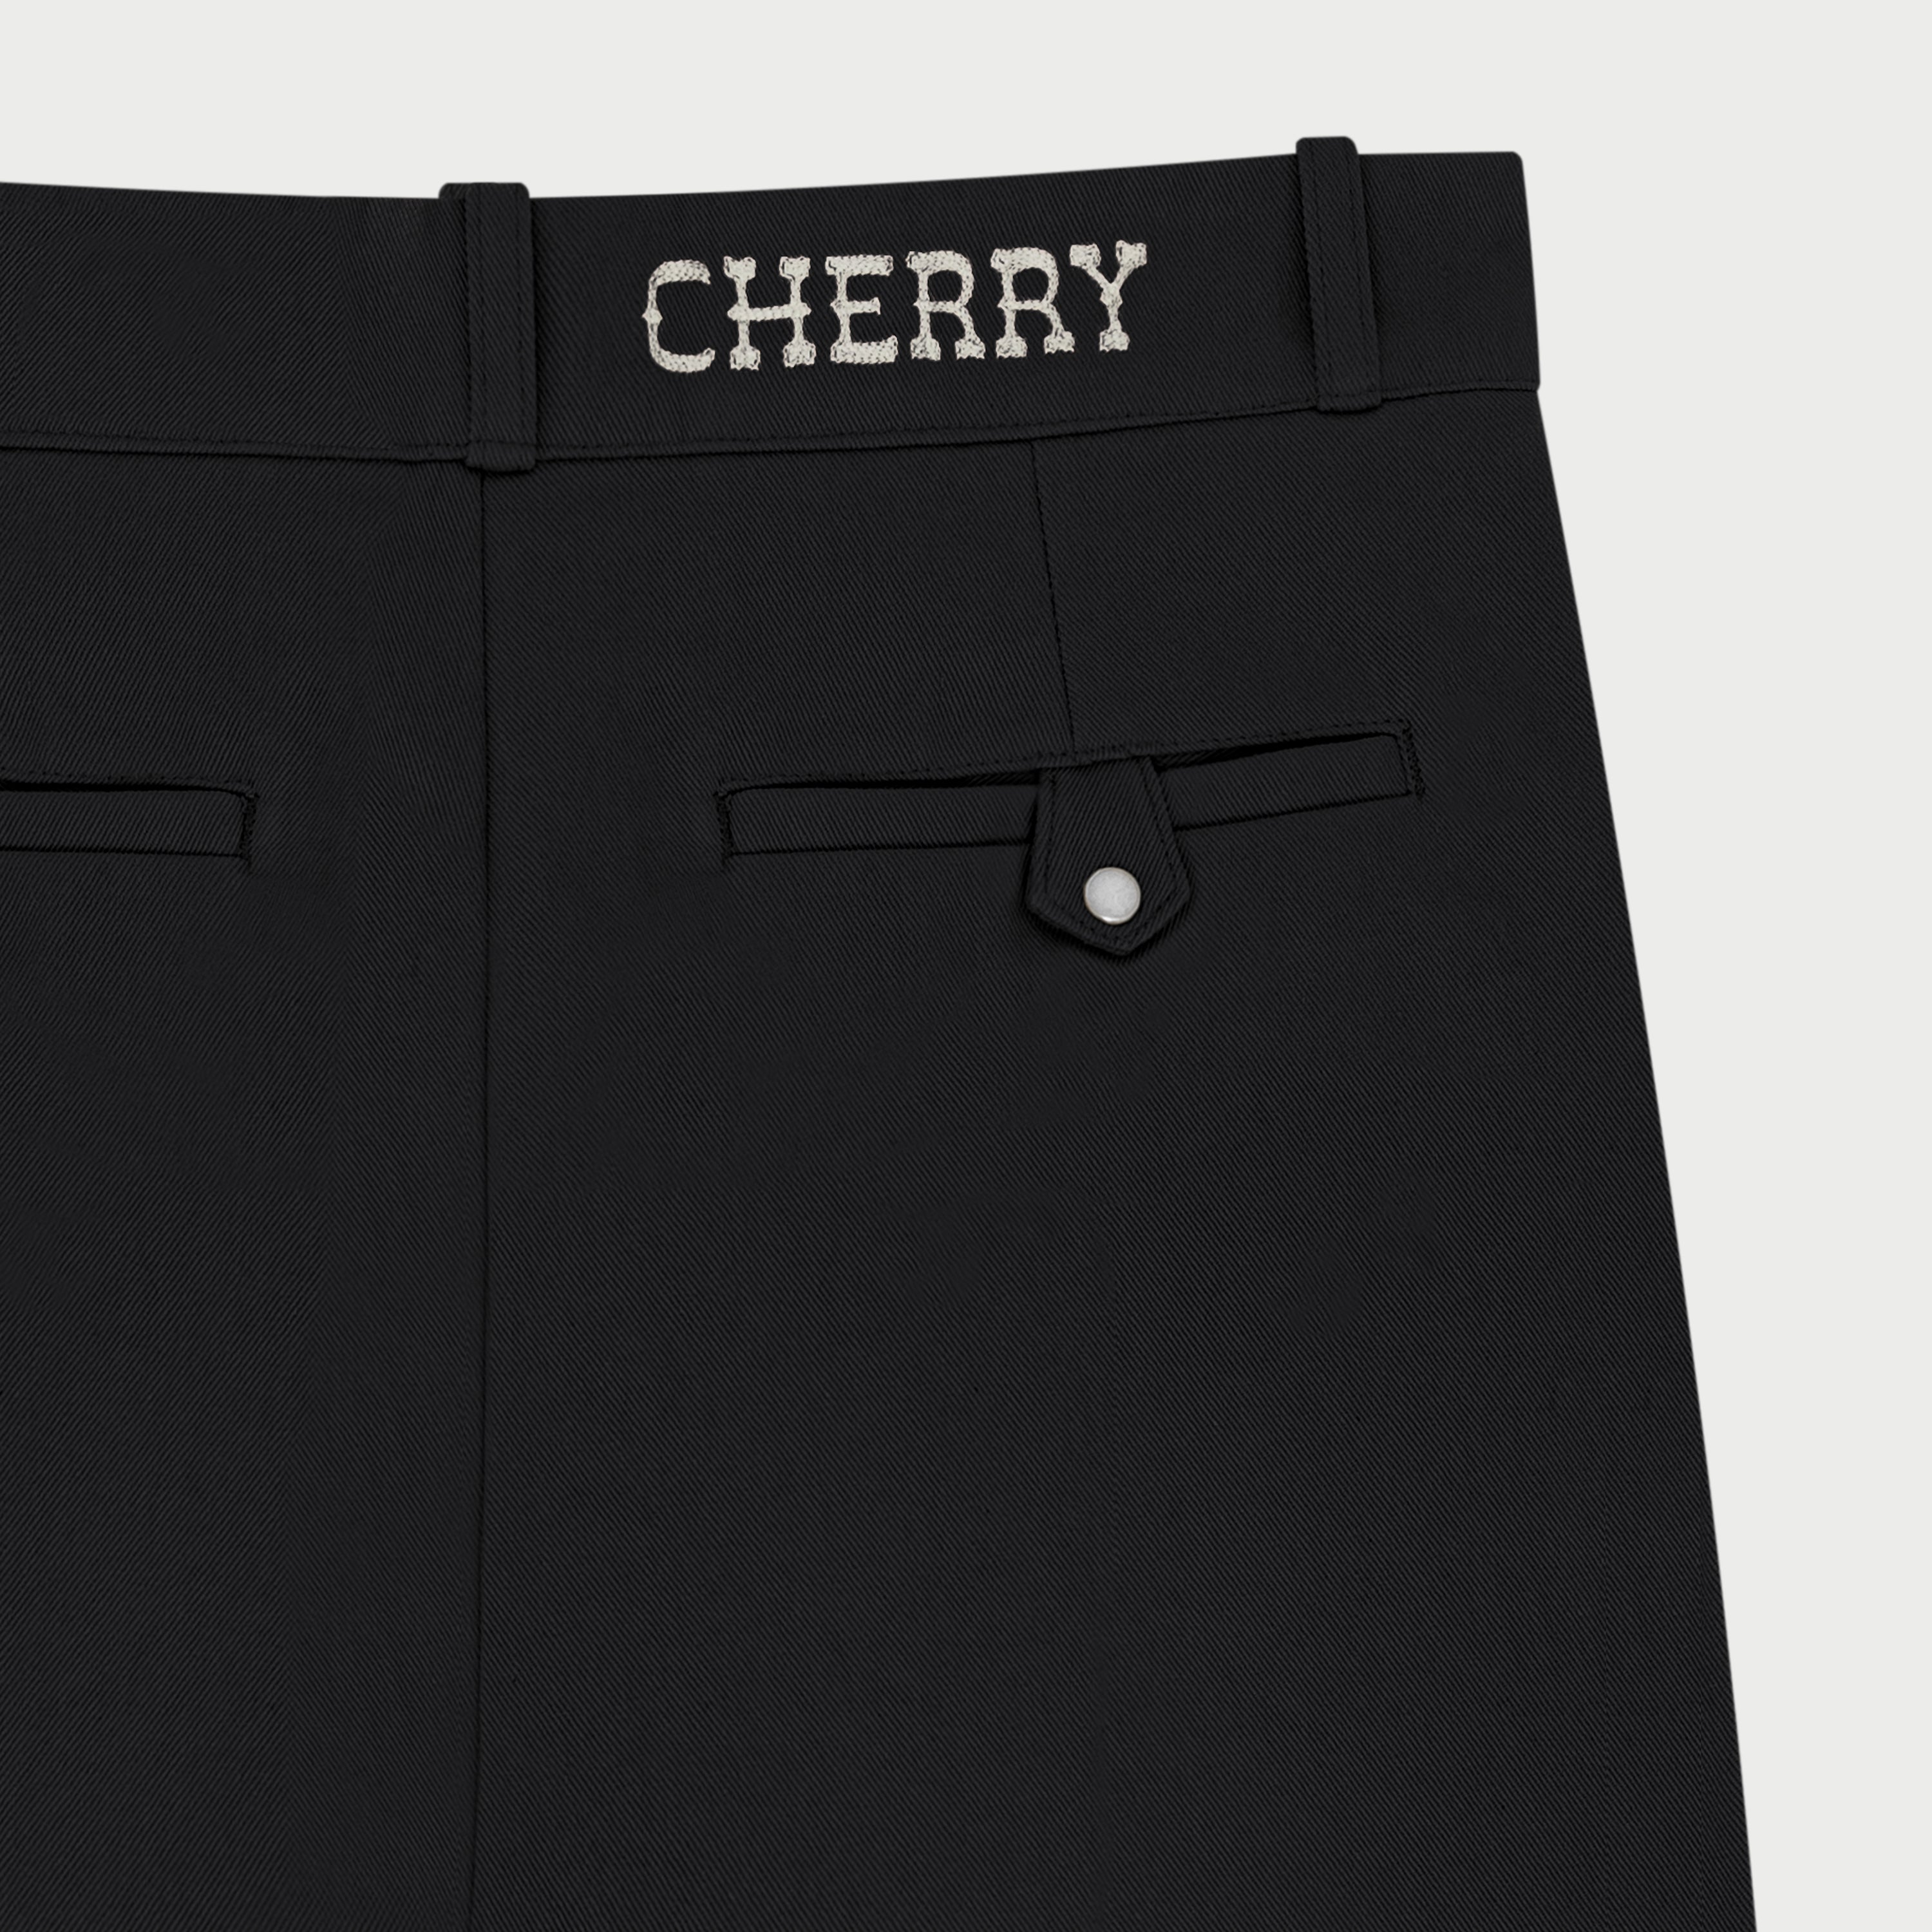 Western Chino Pants (Black)